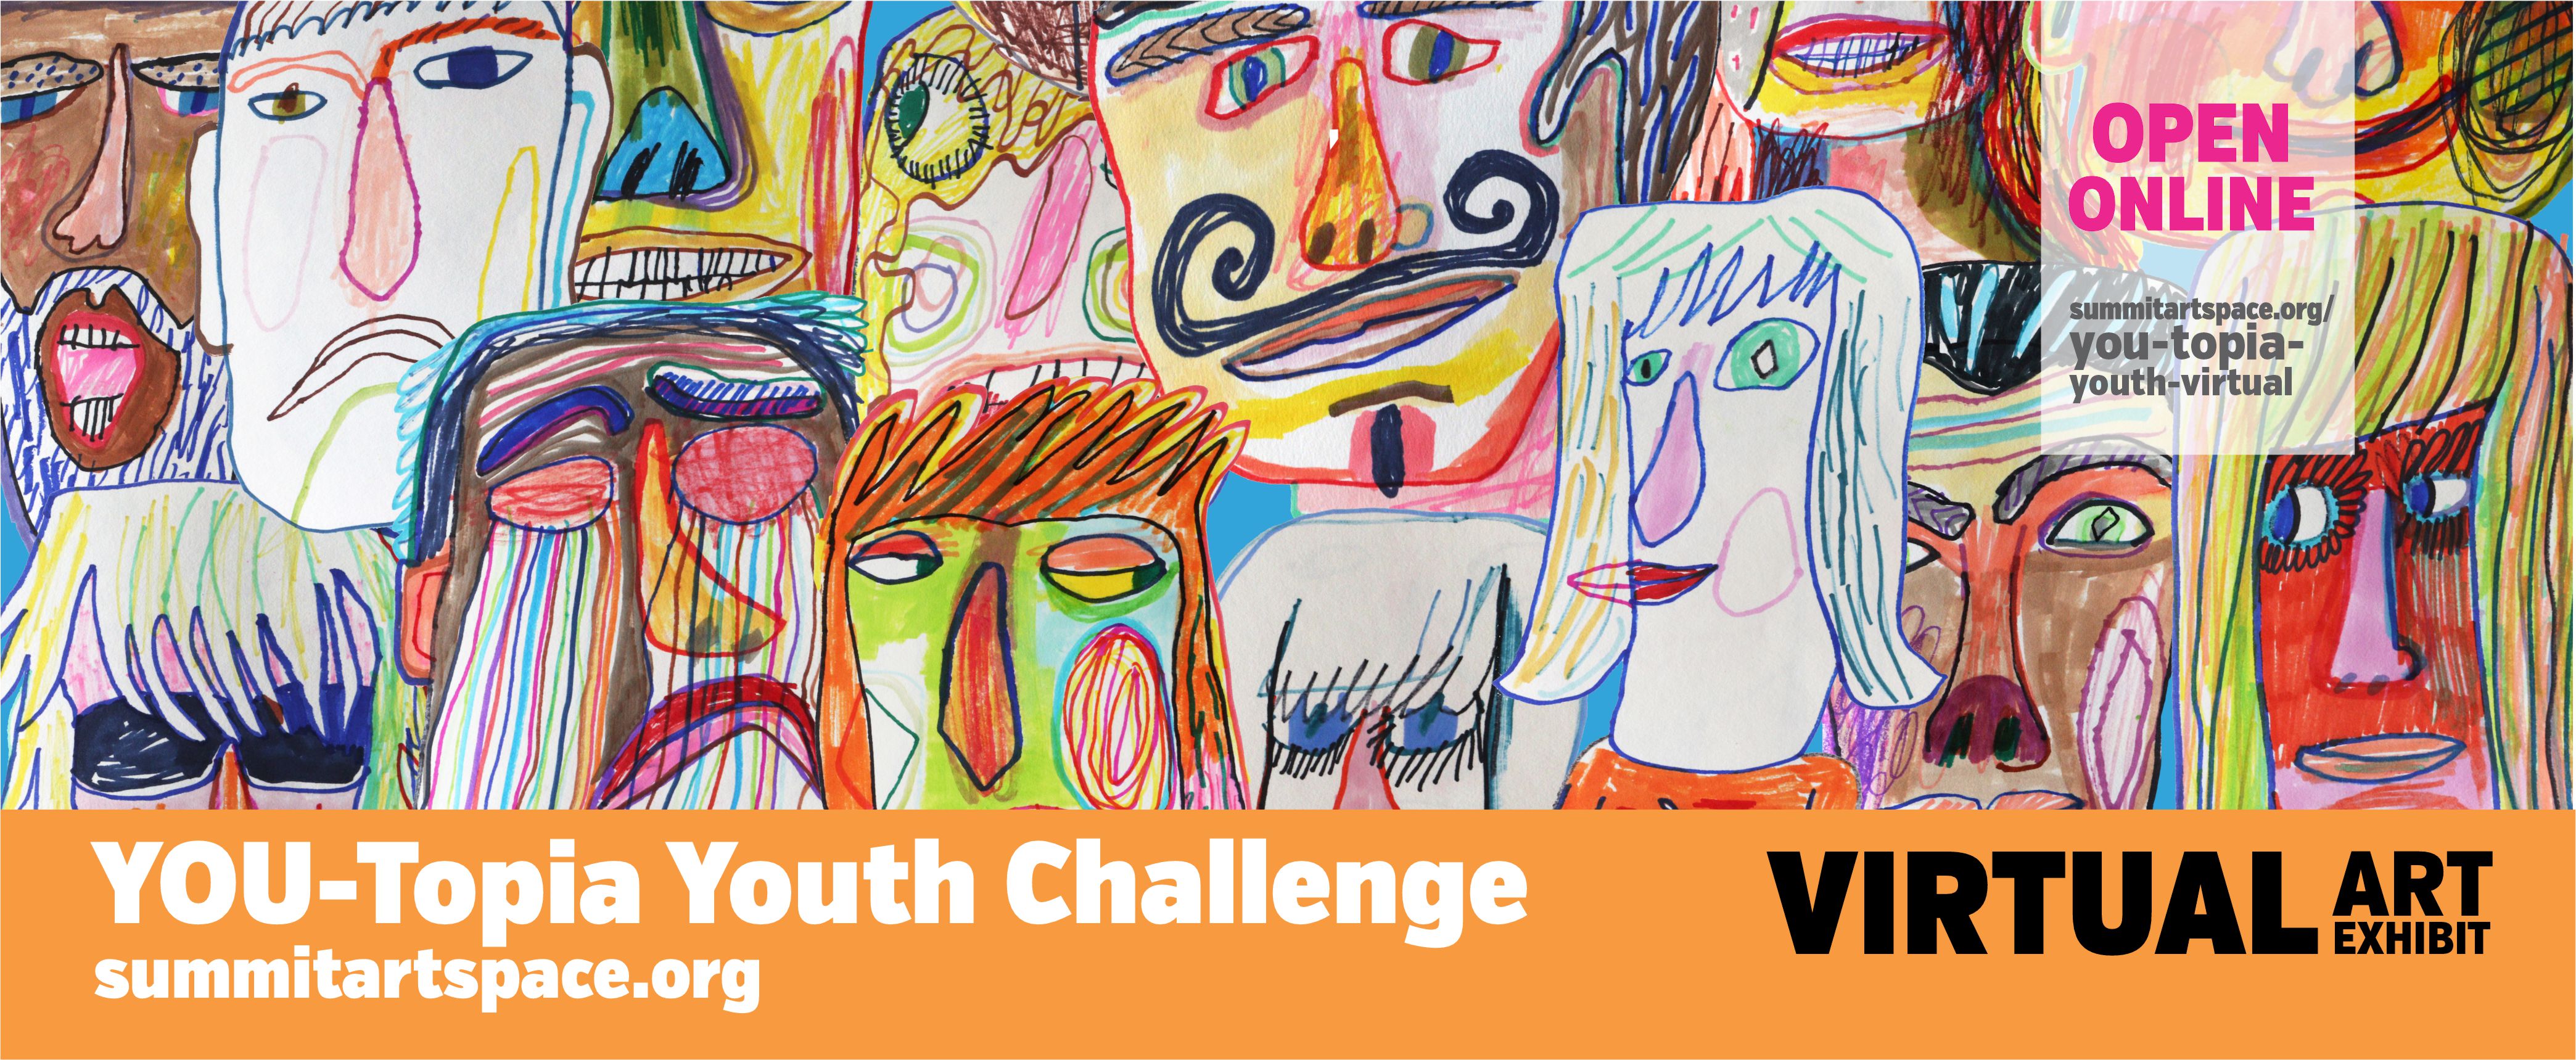 You Topia Virtual Youth Challenge Art Exhibit Summit Artspace